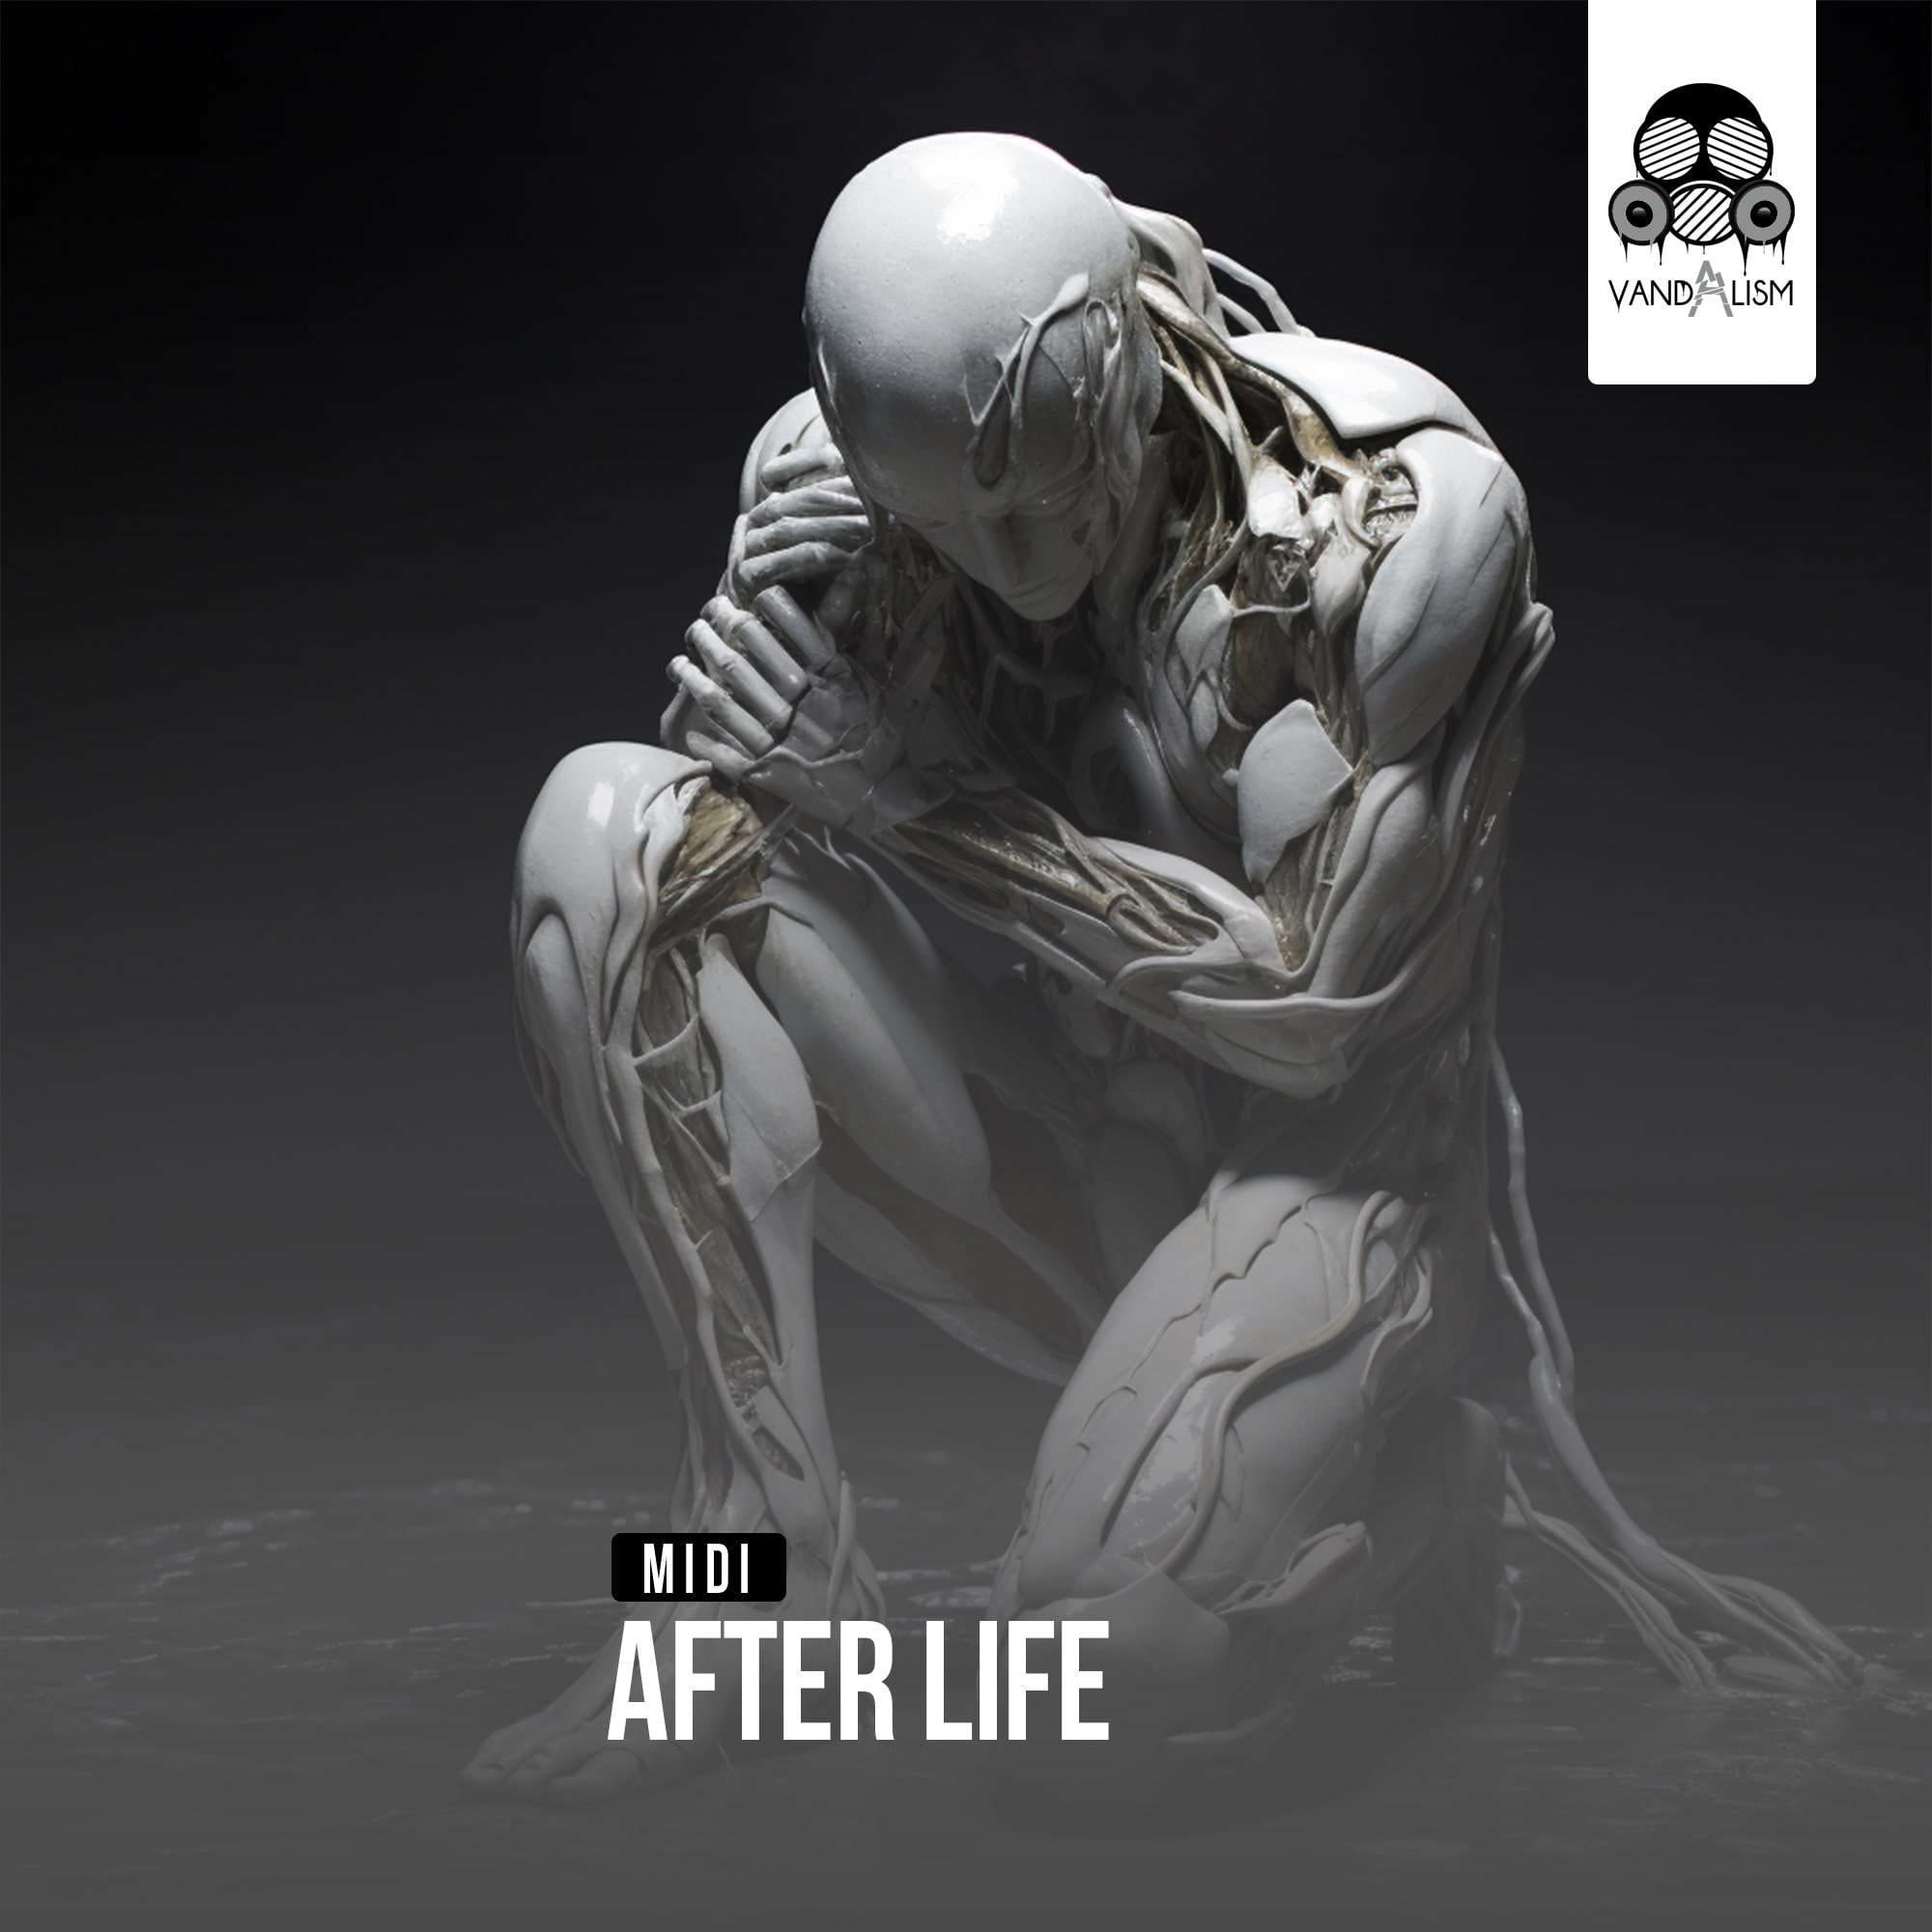 MIDI: After Life